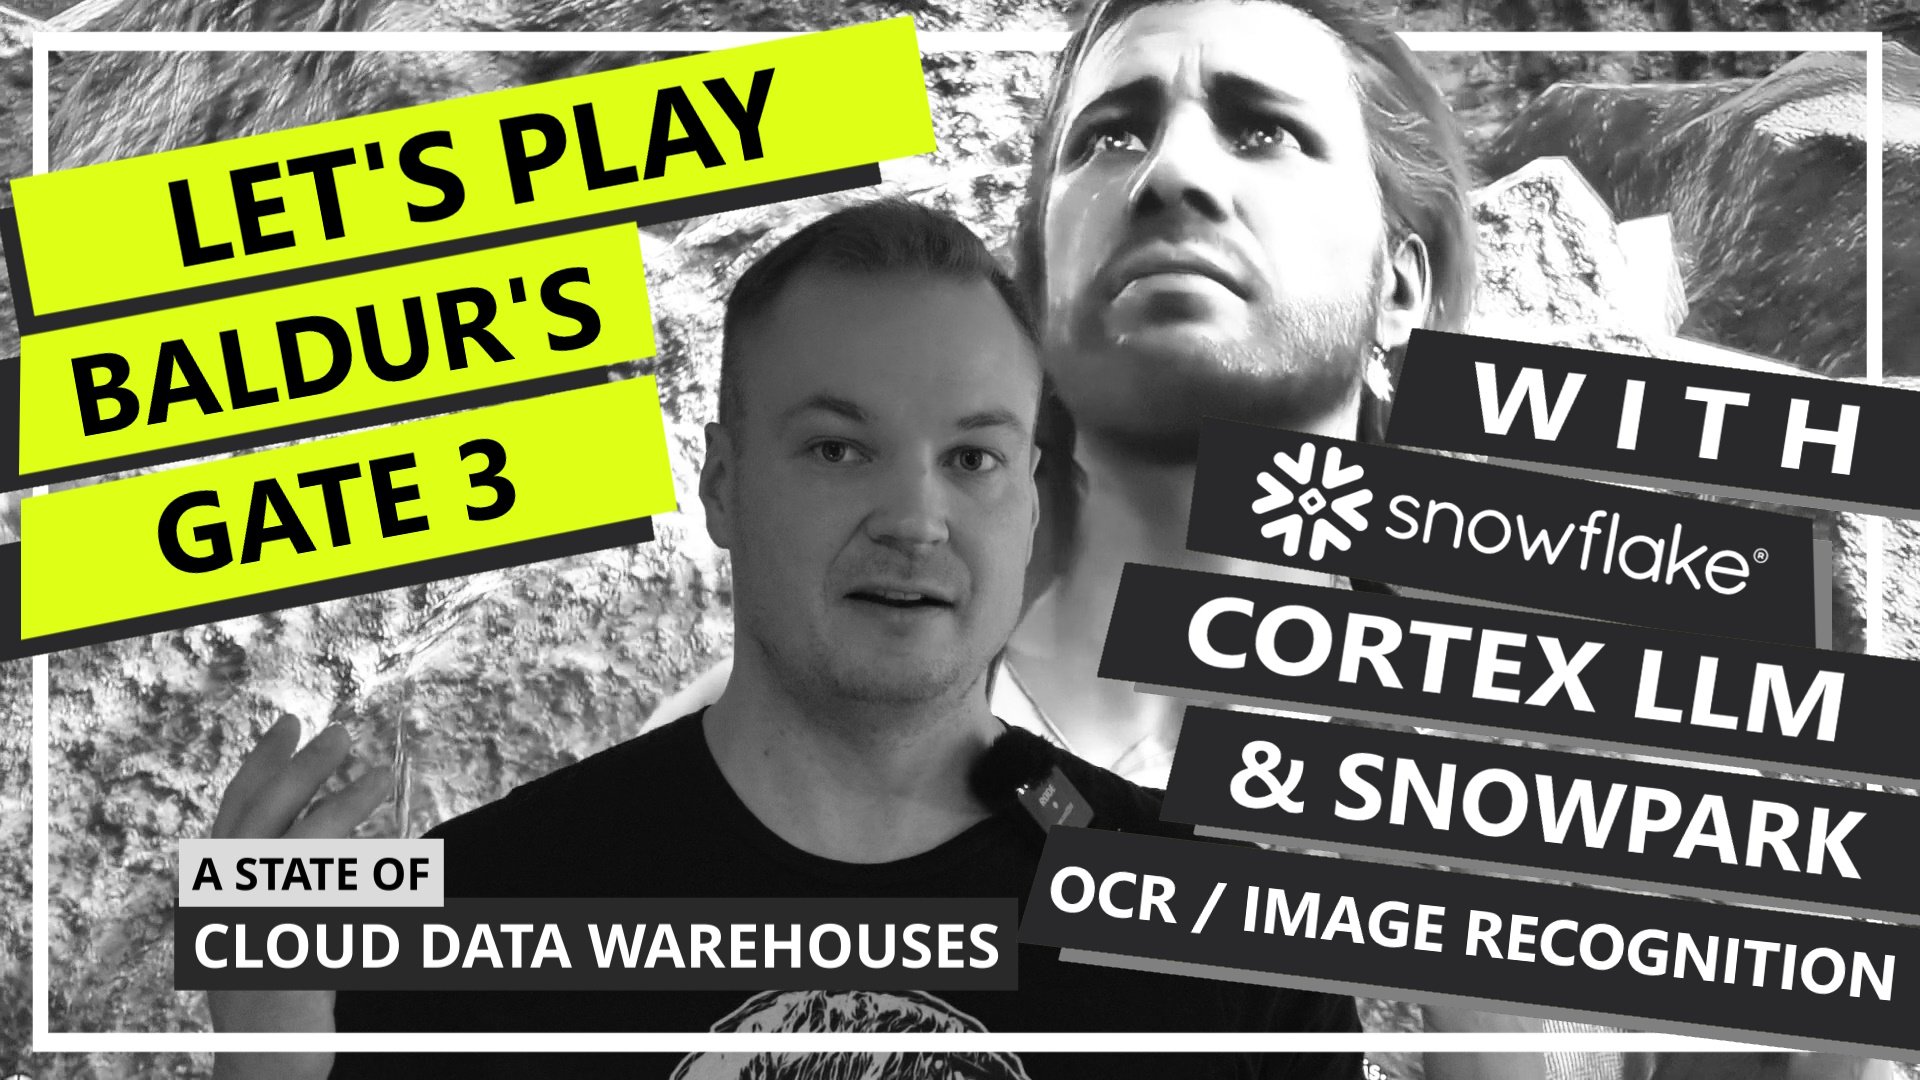 Let's play Baldur's Gate 3 with Snowflake Cortex LLM & Snowpark OCR / Image Recognition